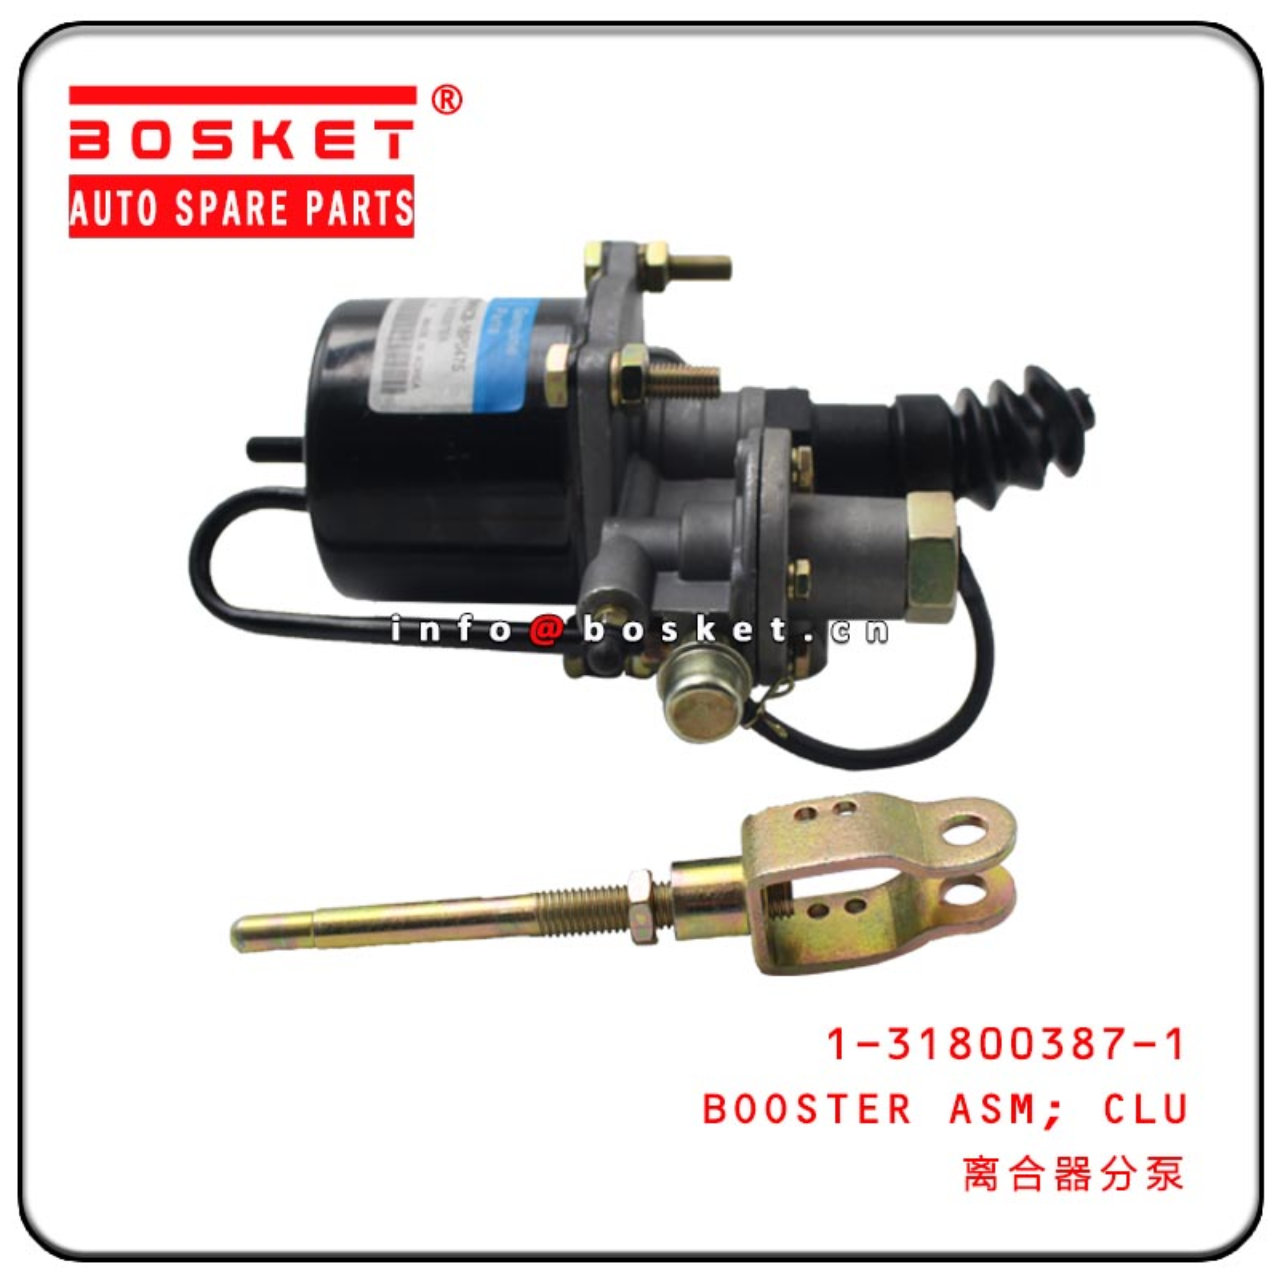 1-31800387-1 1318003871 Clutch Booster Assembly Suitable For ISUZU6HK1 FRR FSR FTR 